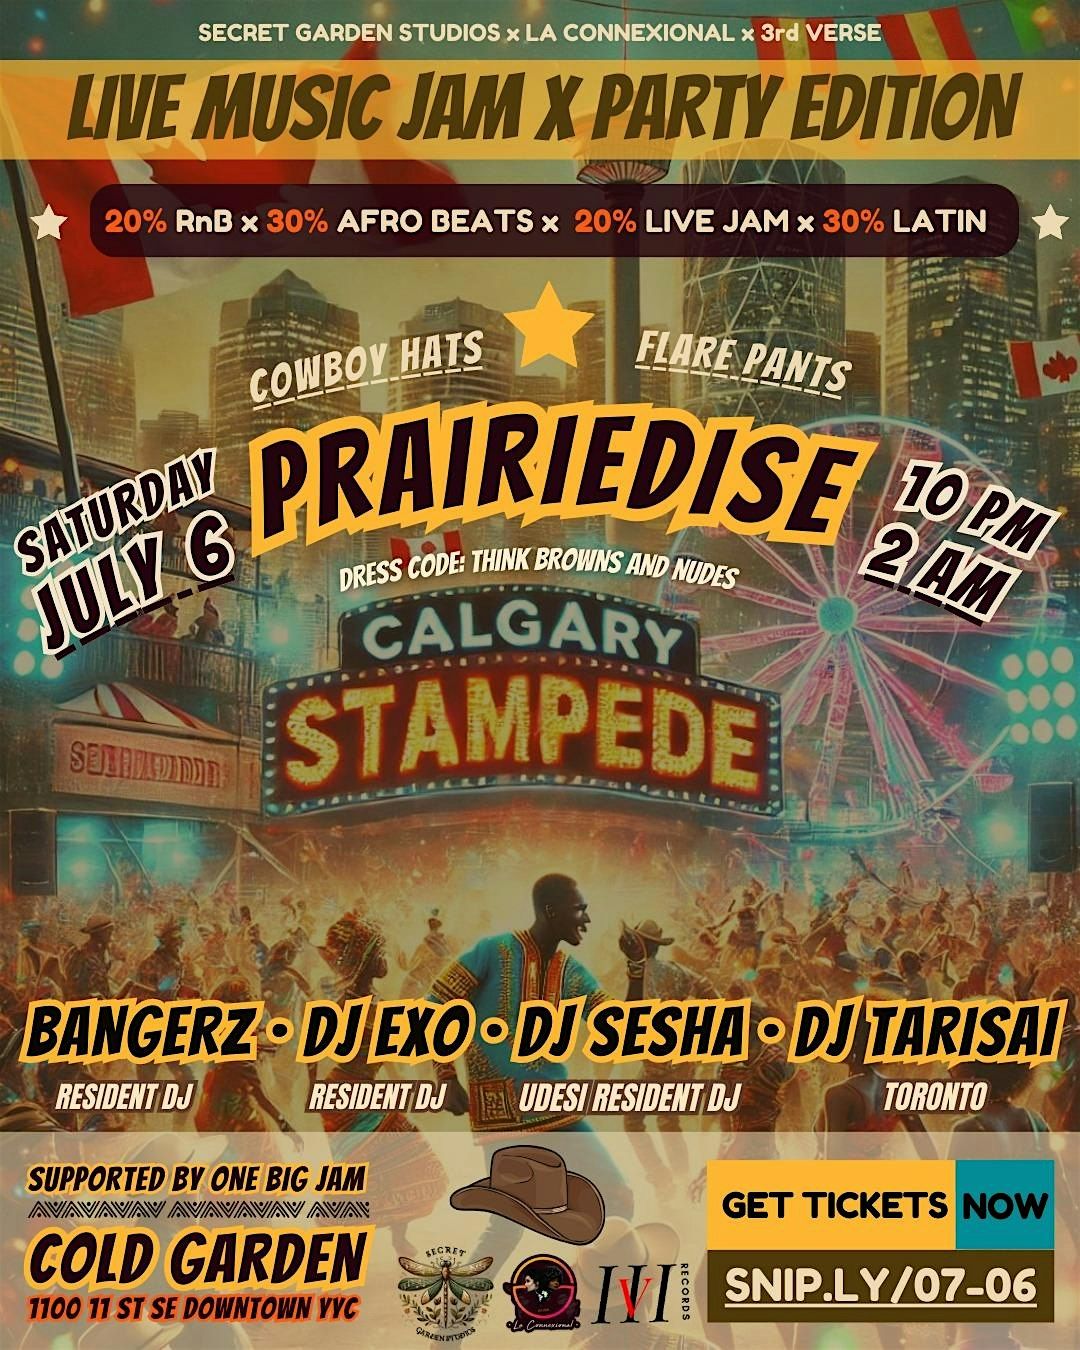 Calgary Stampede's PRAIRIEDISE Attire Party x Live Music Jam Experience